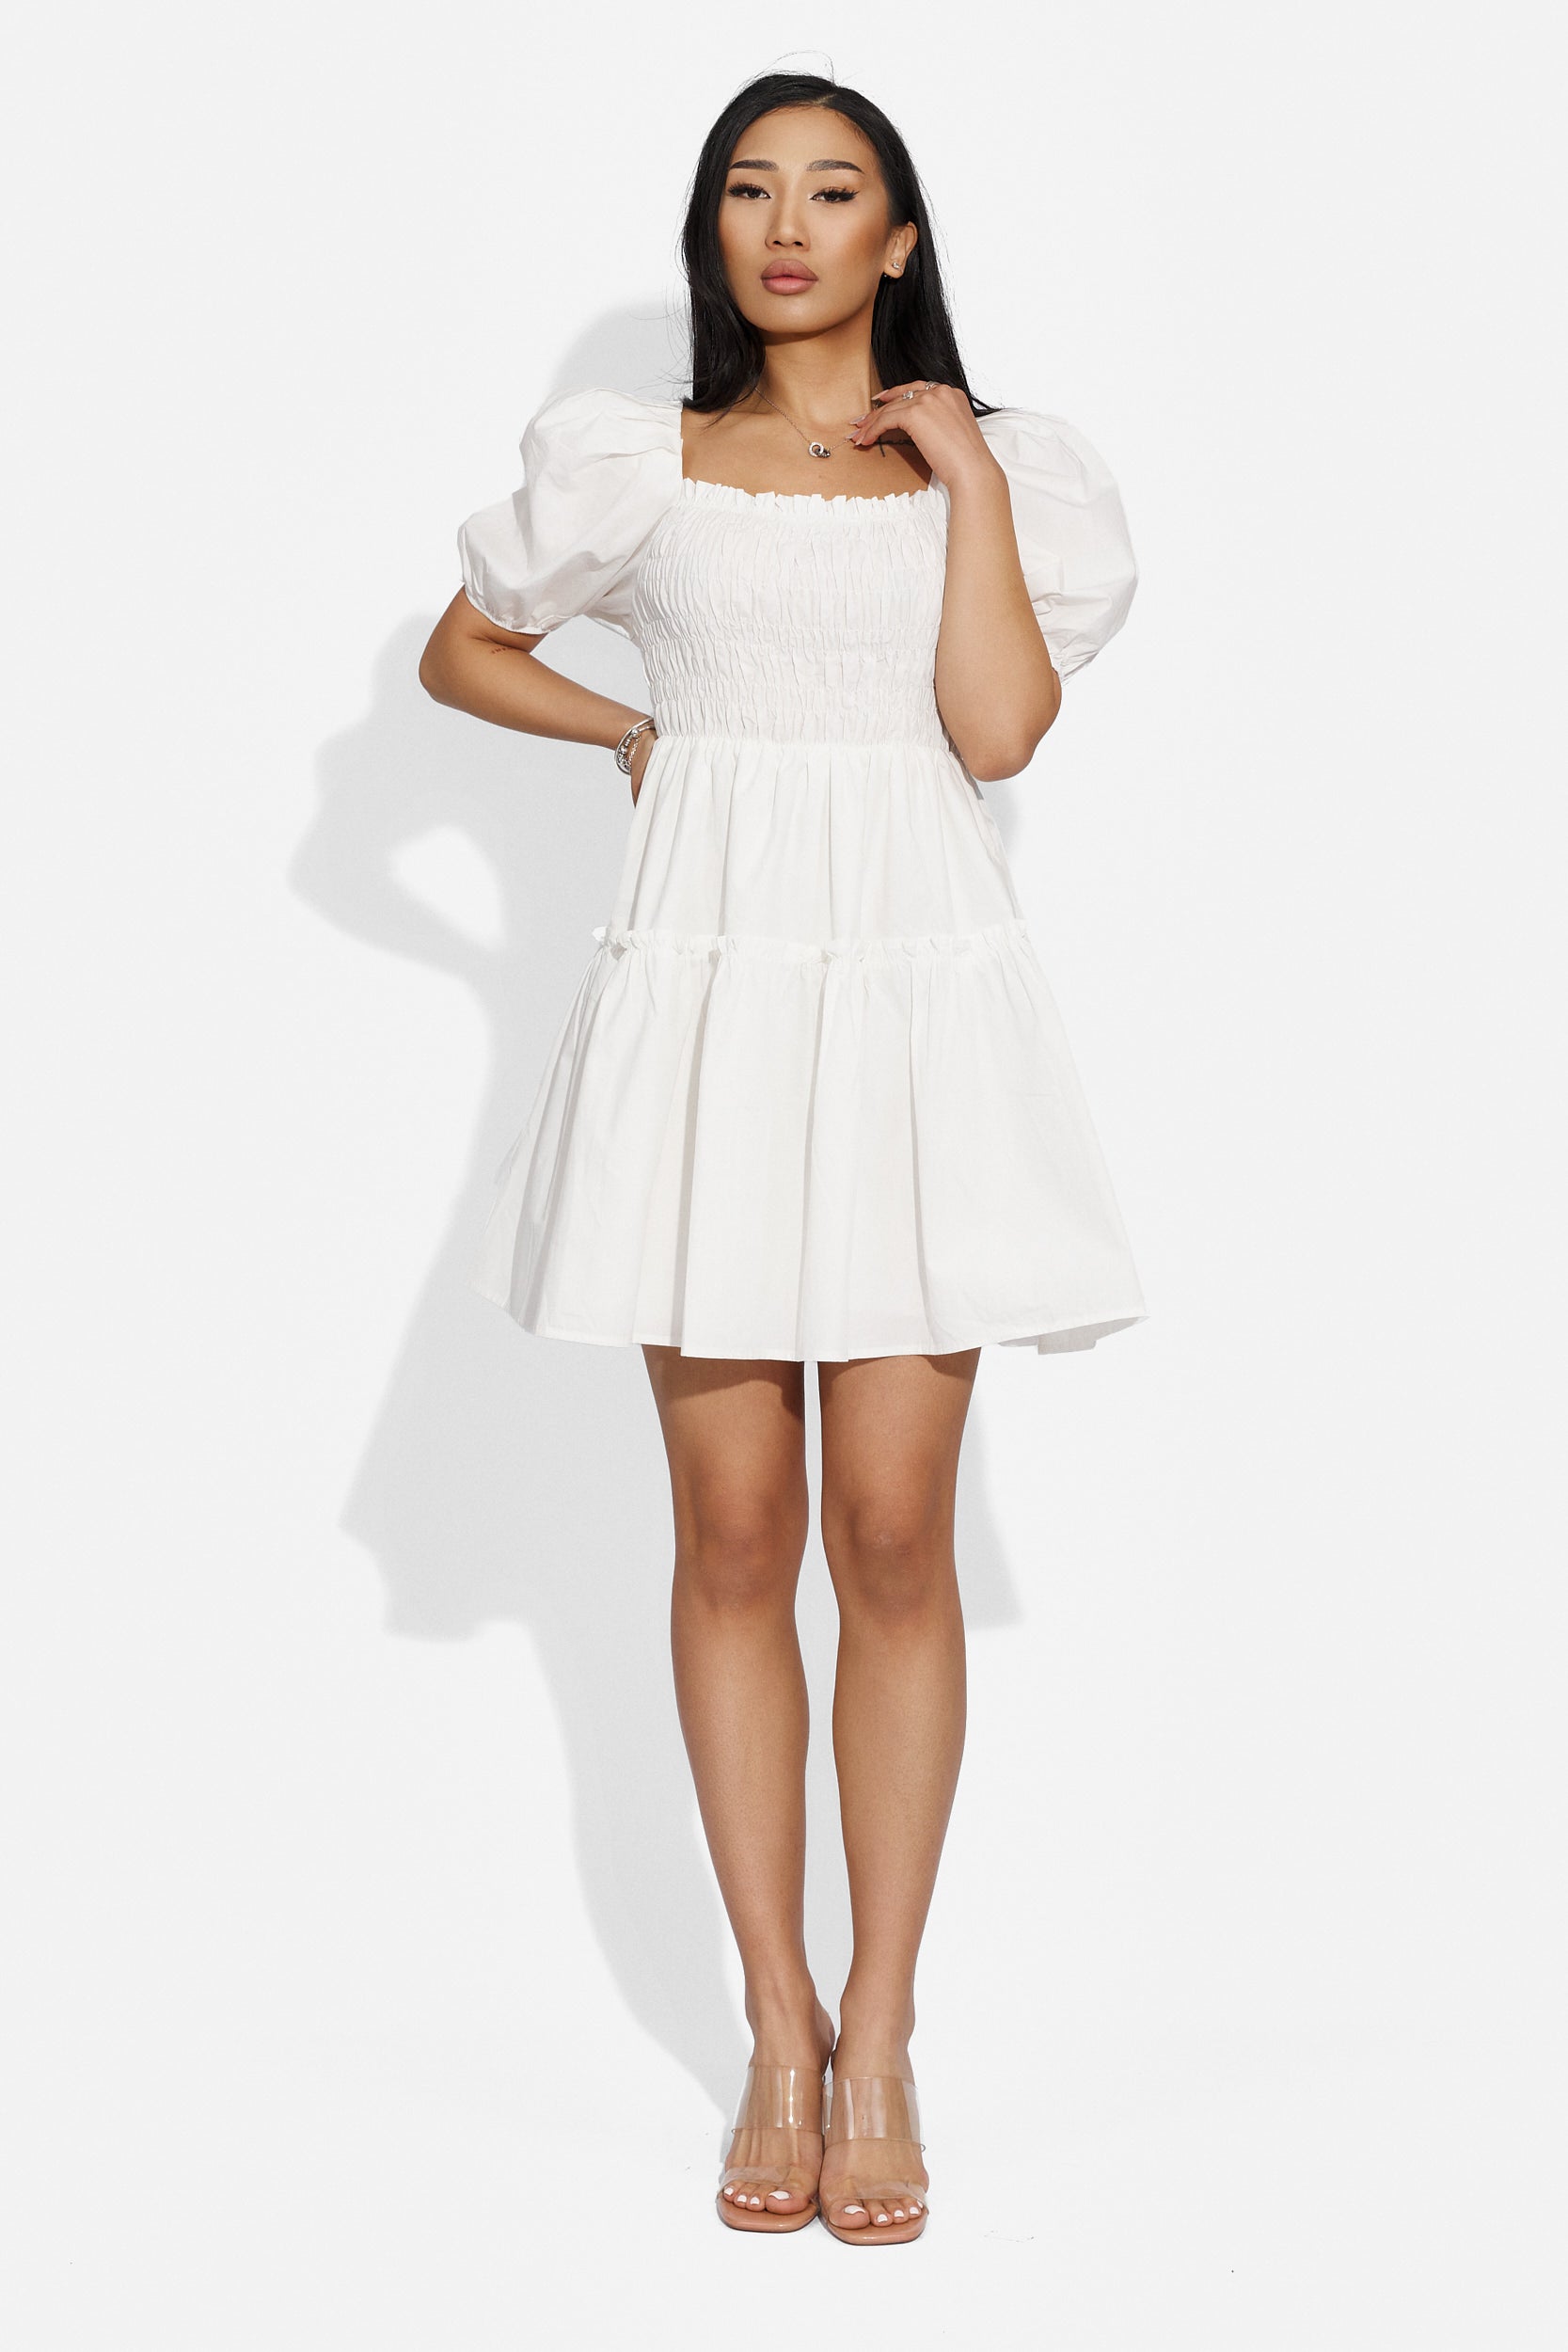 Ladies short white dress Maceira Bogas